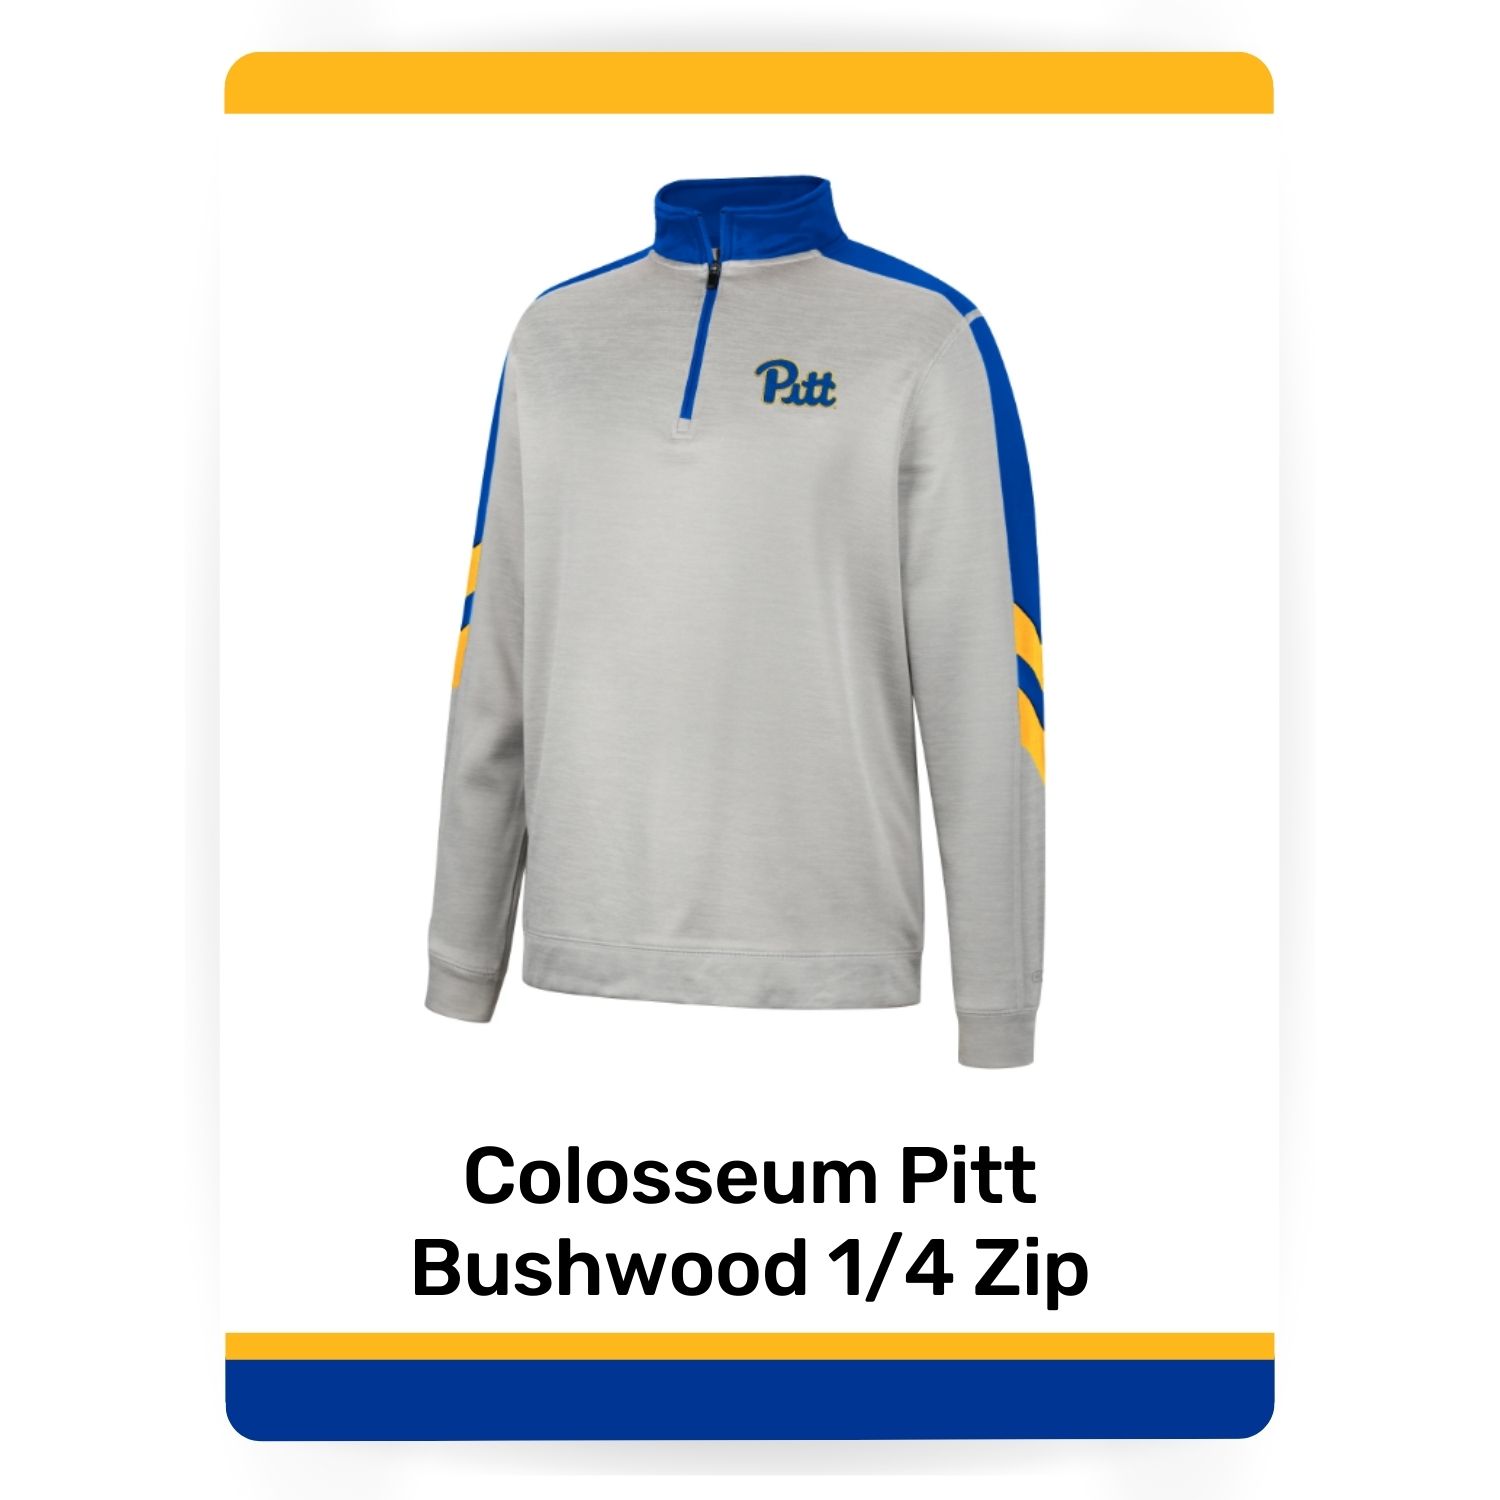 Colosseum Pitt Bushwood 1/4 Zip